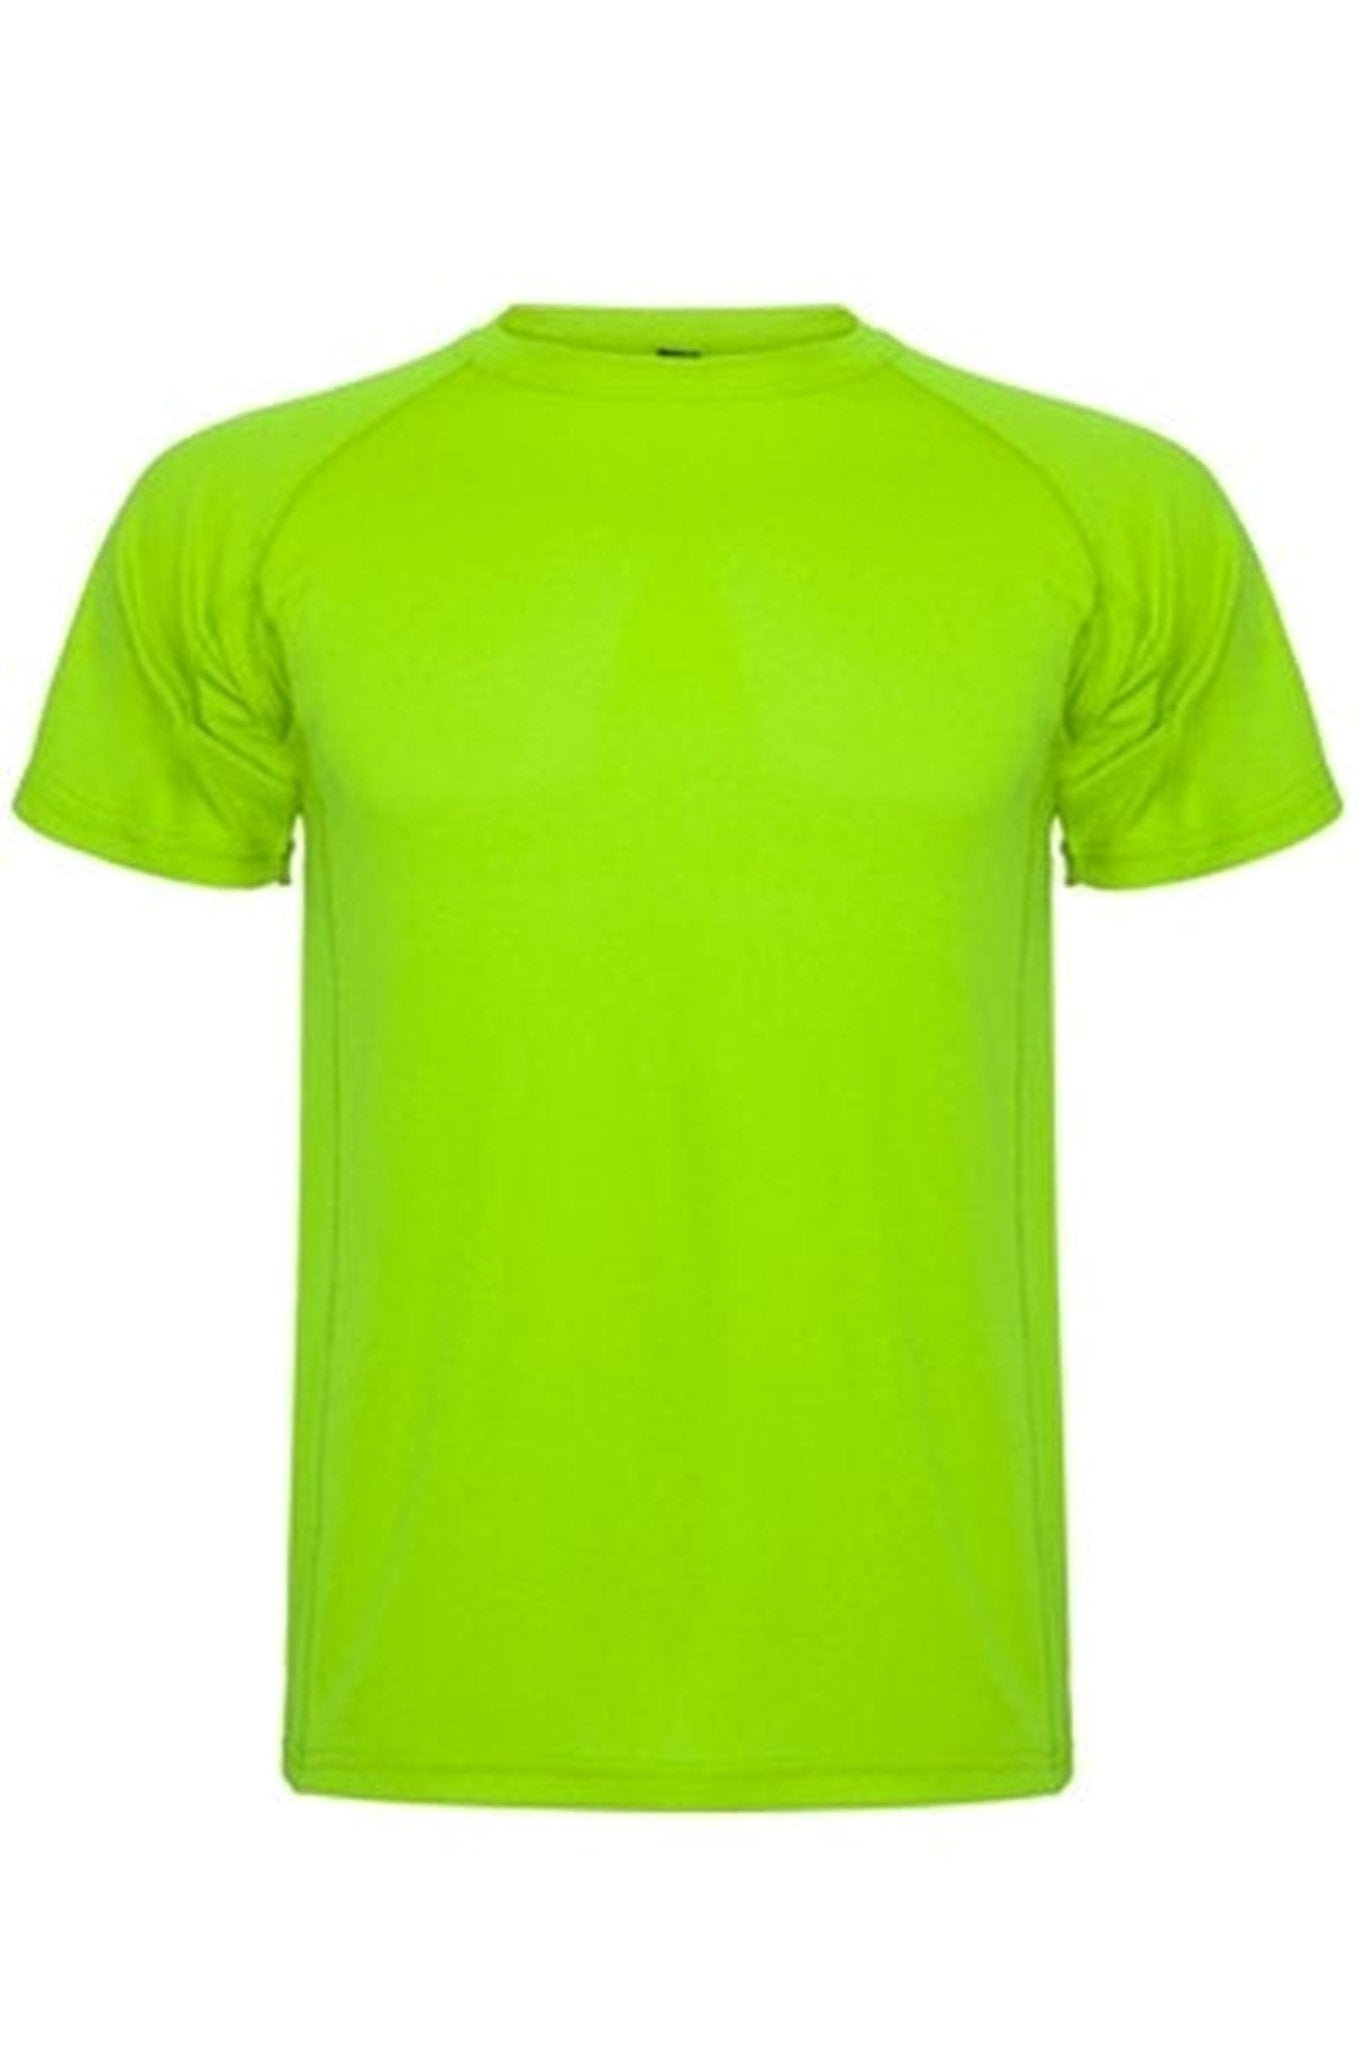 Trænings T-shirt - Lime Grøn - TeeShoppen - Grøn